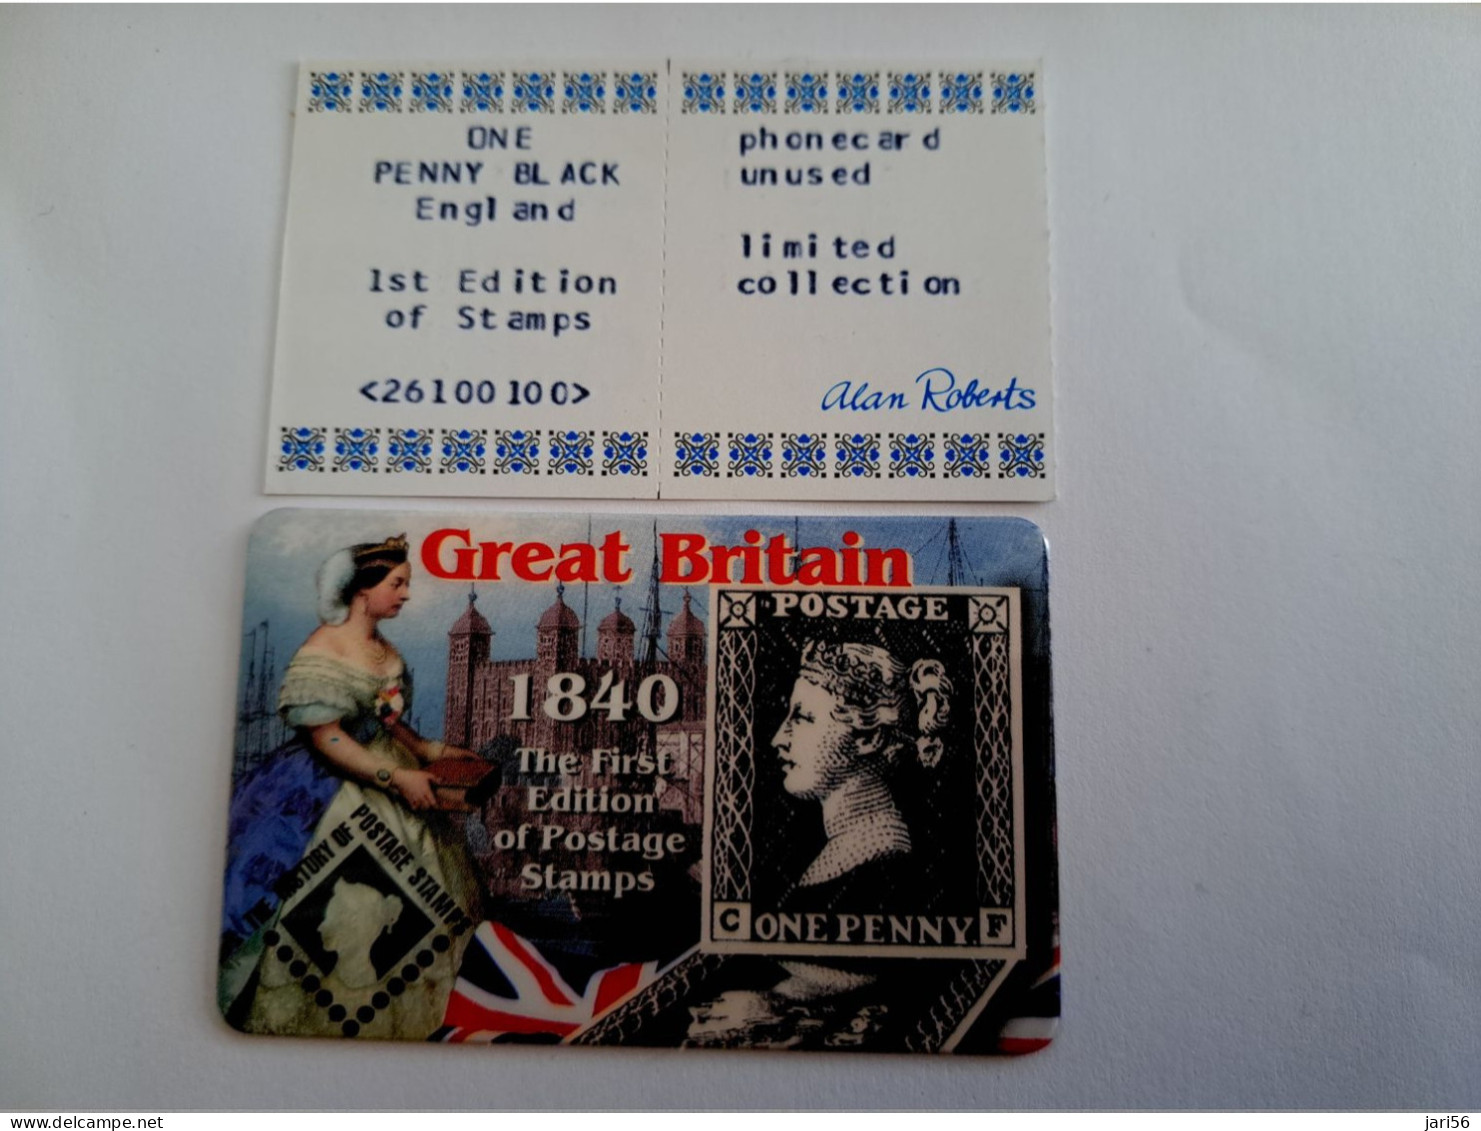 GREAT BRITAIN /20 UNITS / PENNY BLACK  1840 / DATE 06/2002     /    PREPAID CARD / LIMITED EDITION/ MINT  **15703** - Verzamelingen